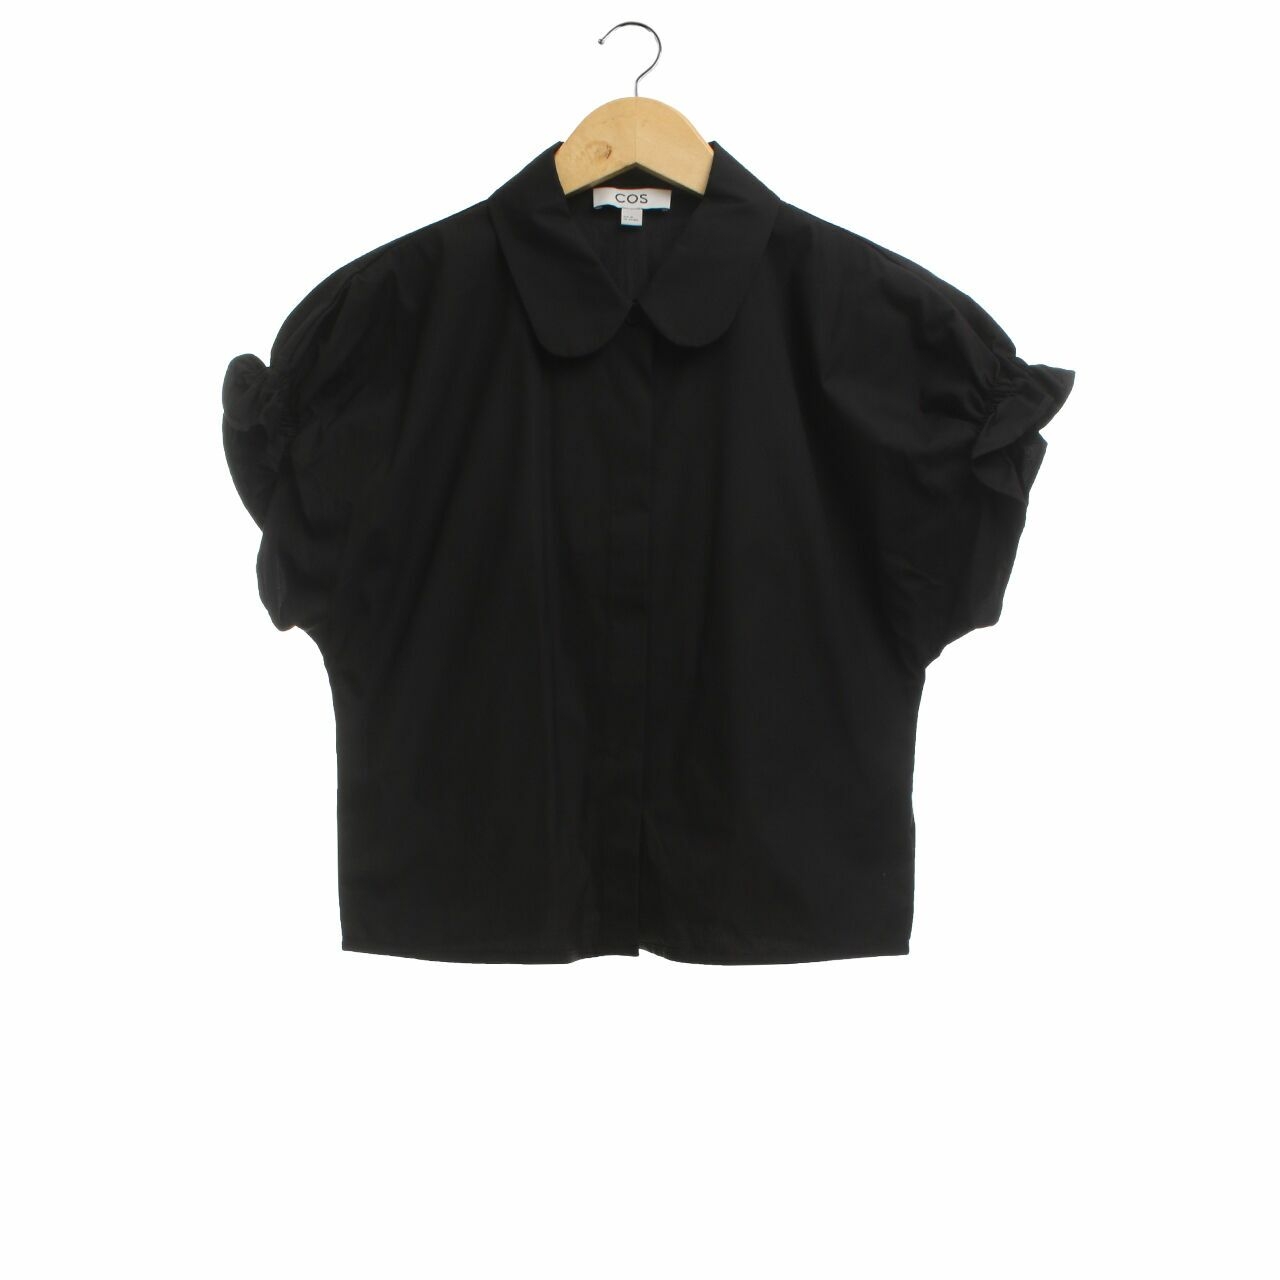 COS Black Shirt